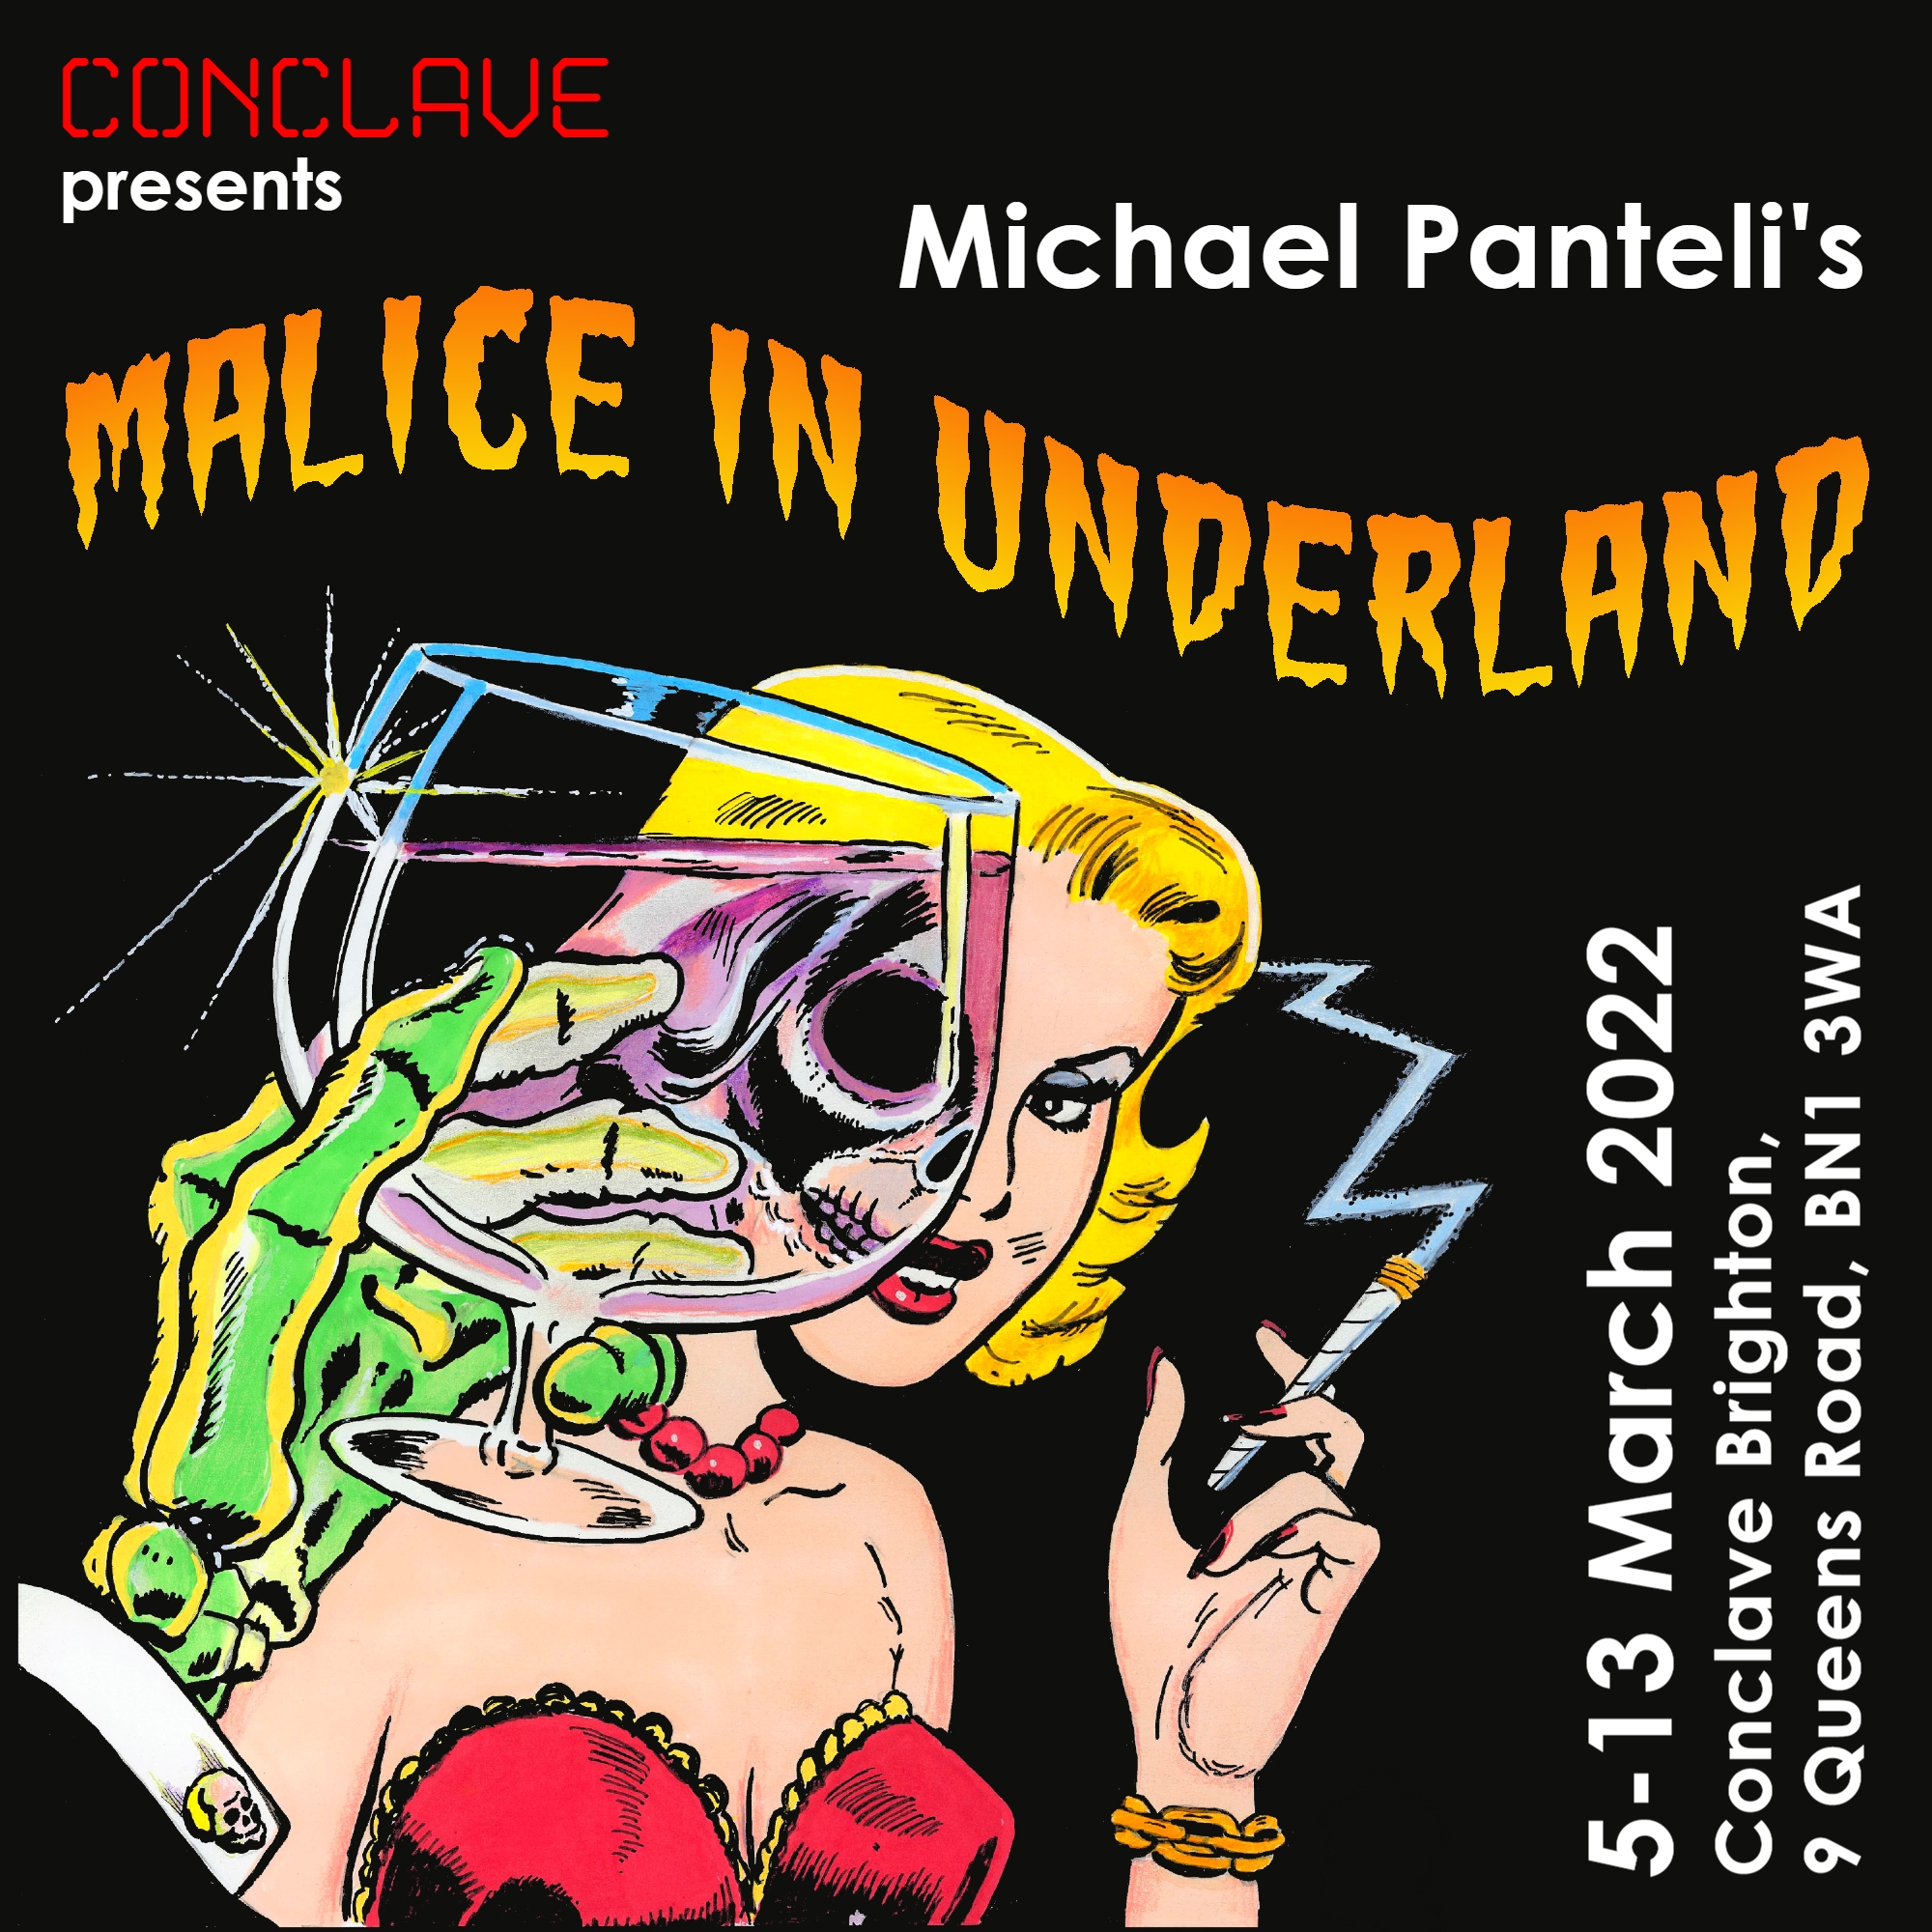 CONCLAVE PRESENTS Michael Panteli's Malice in Underland